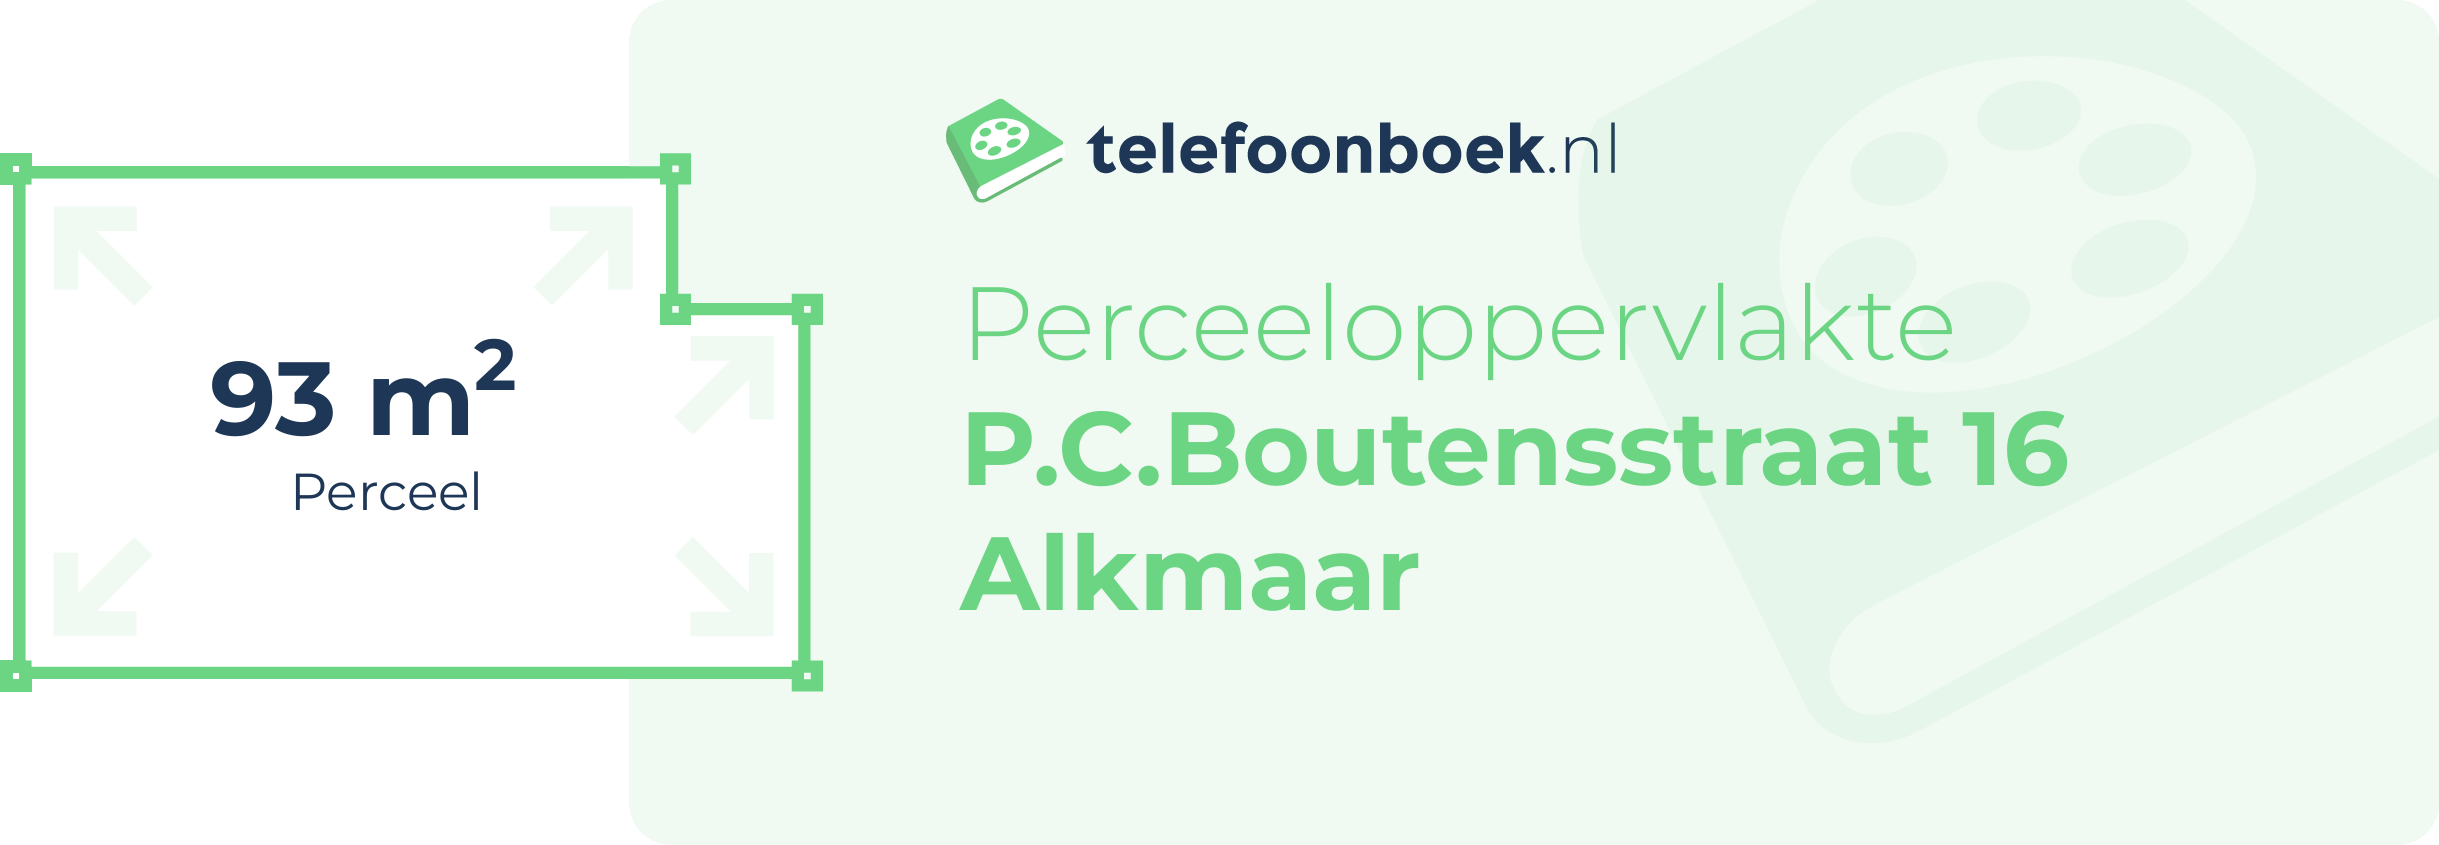 Perceeloppervlakte P.C.Boutensstraat 16 Alkmaar